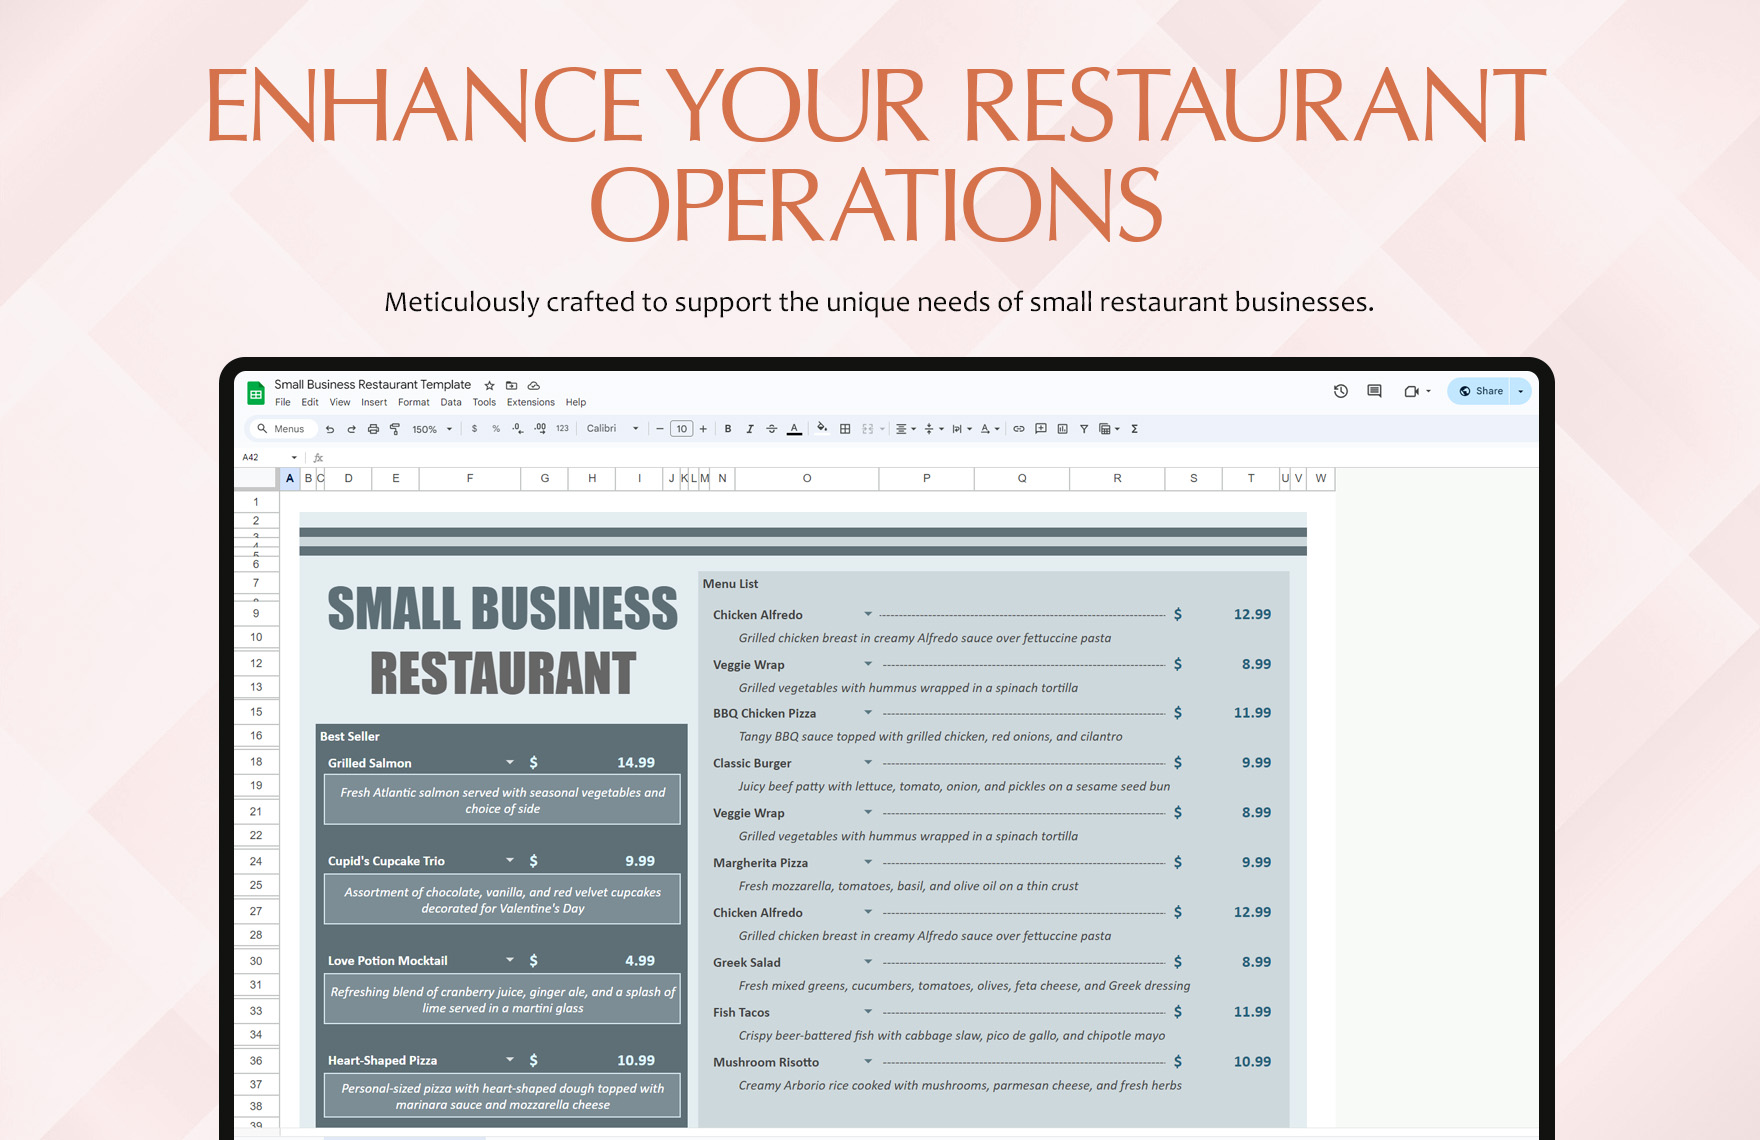 Small Business Restaurant Template